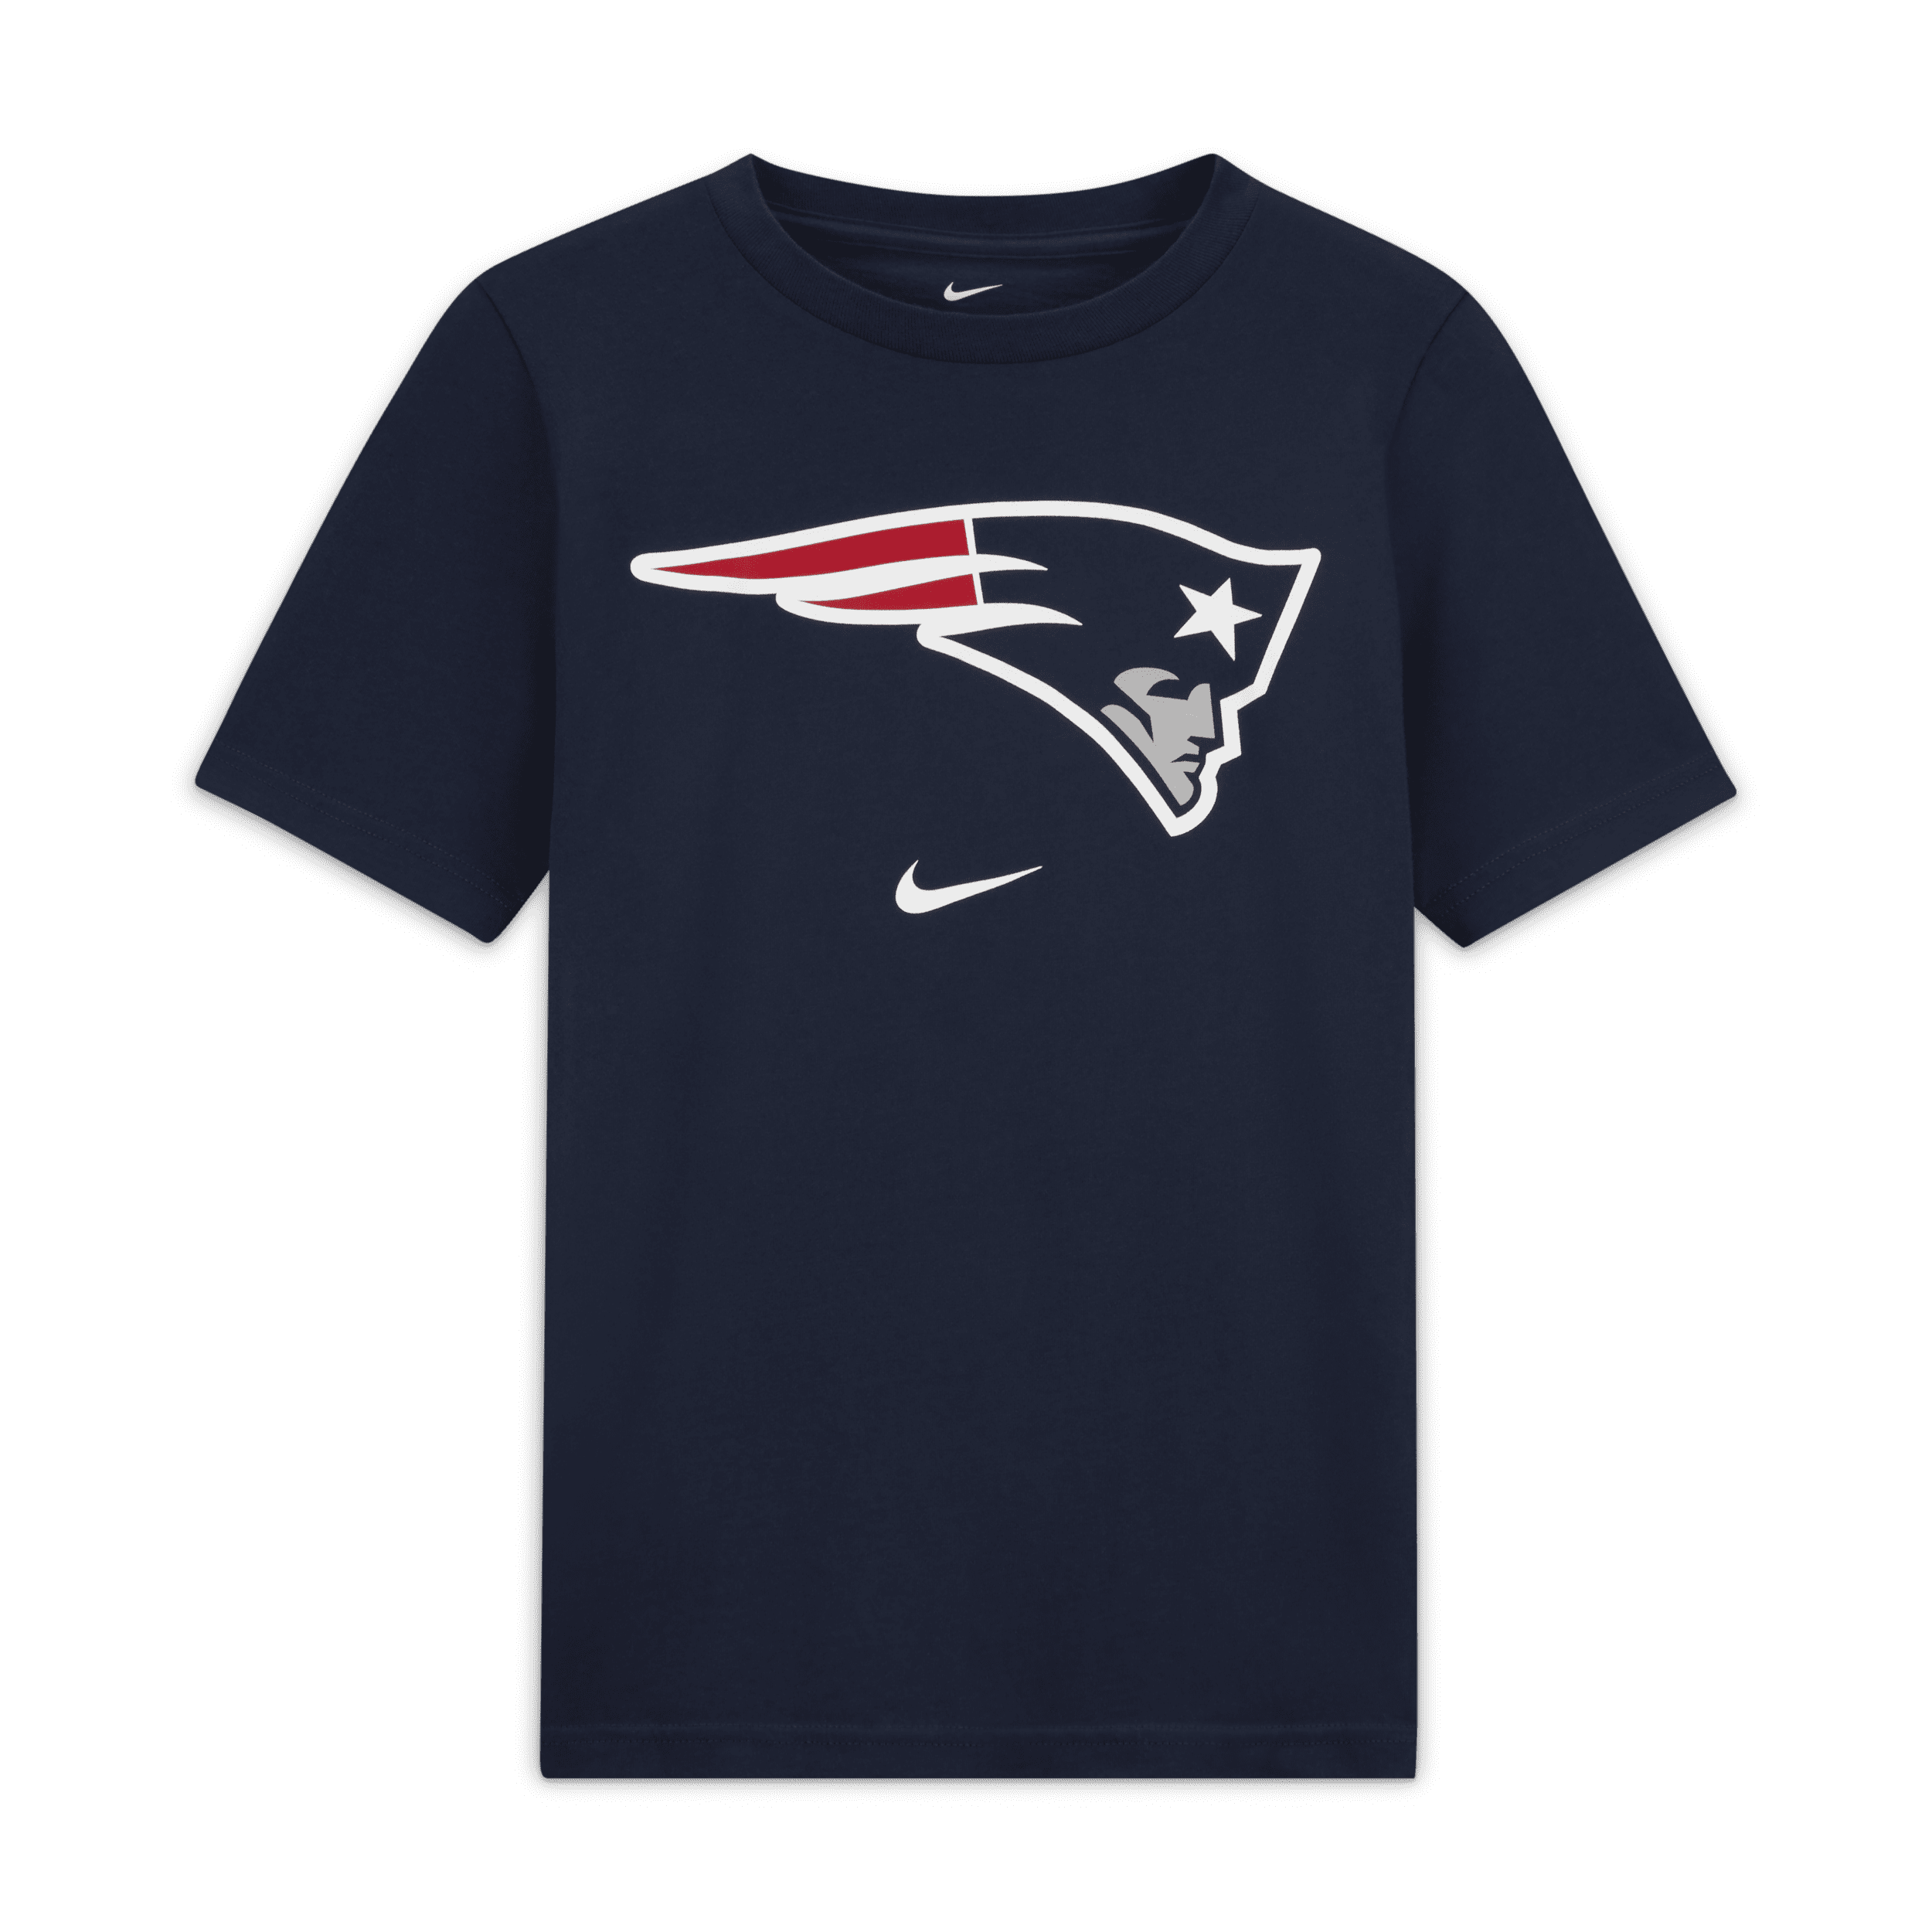 T-shirt Nike (NFL New England Patriots) – Ragazzo/a - Blu